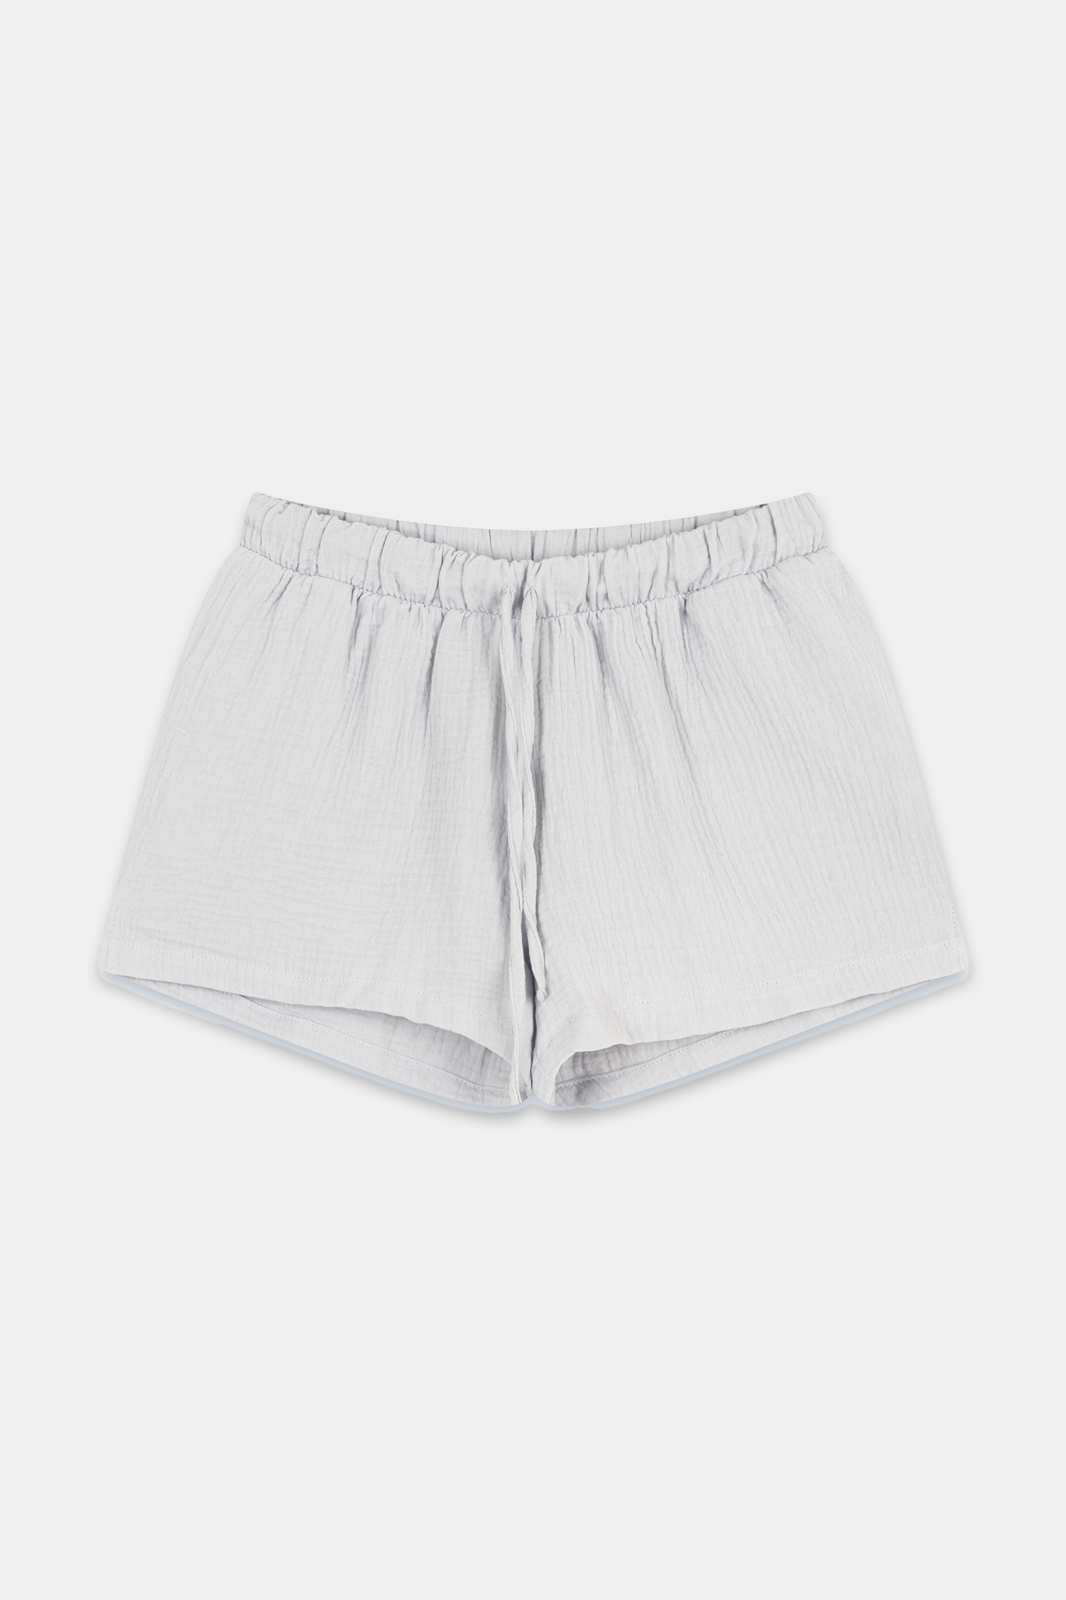 Muslin Pastel Grey Shorts with Pockets